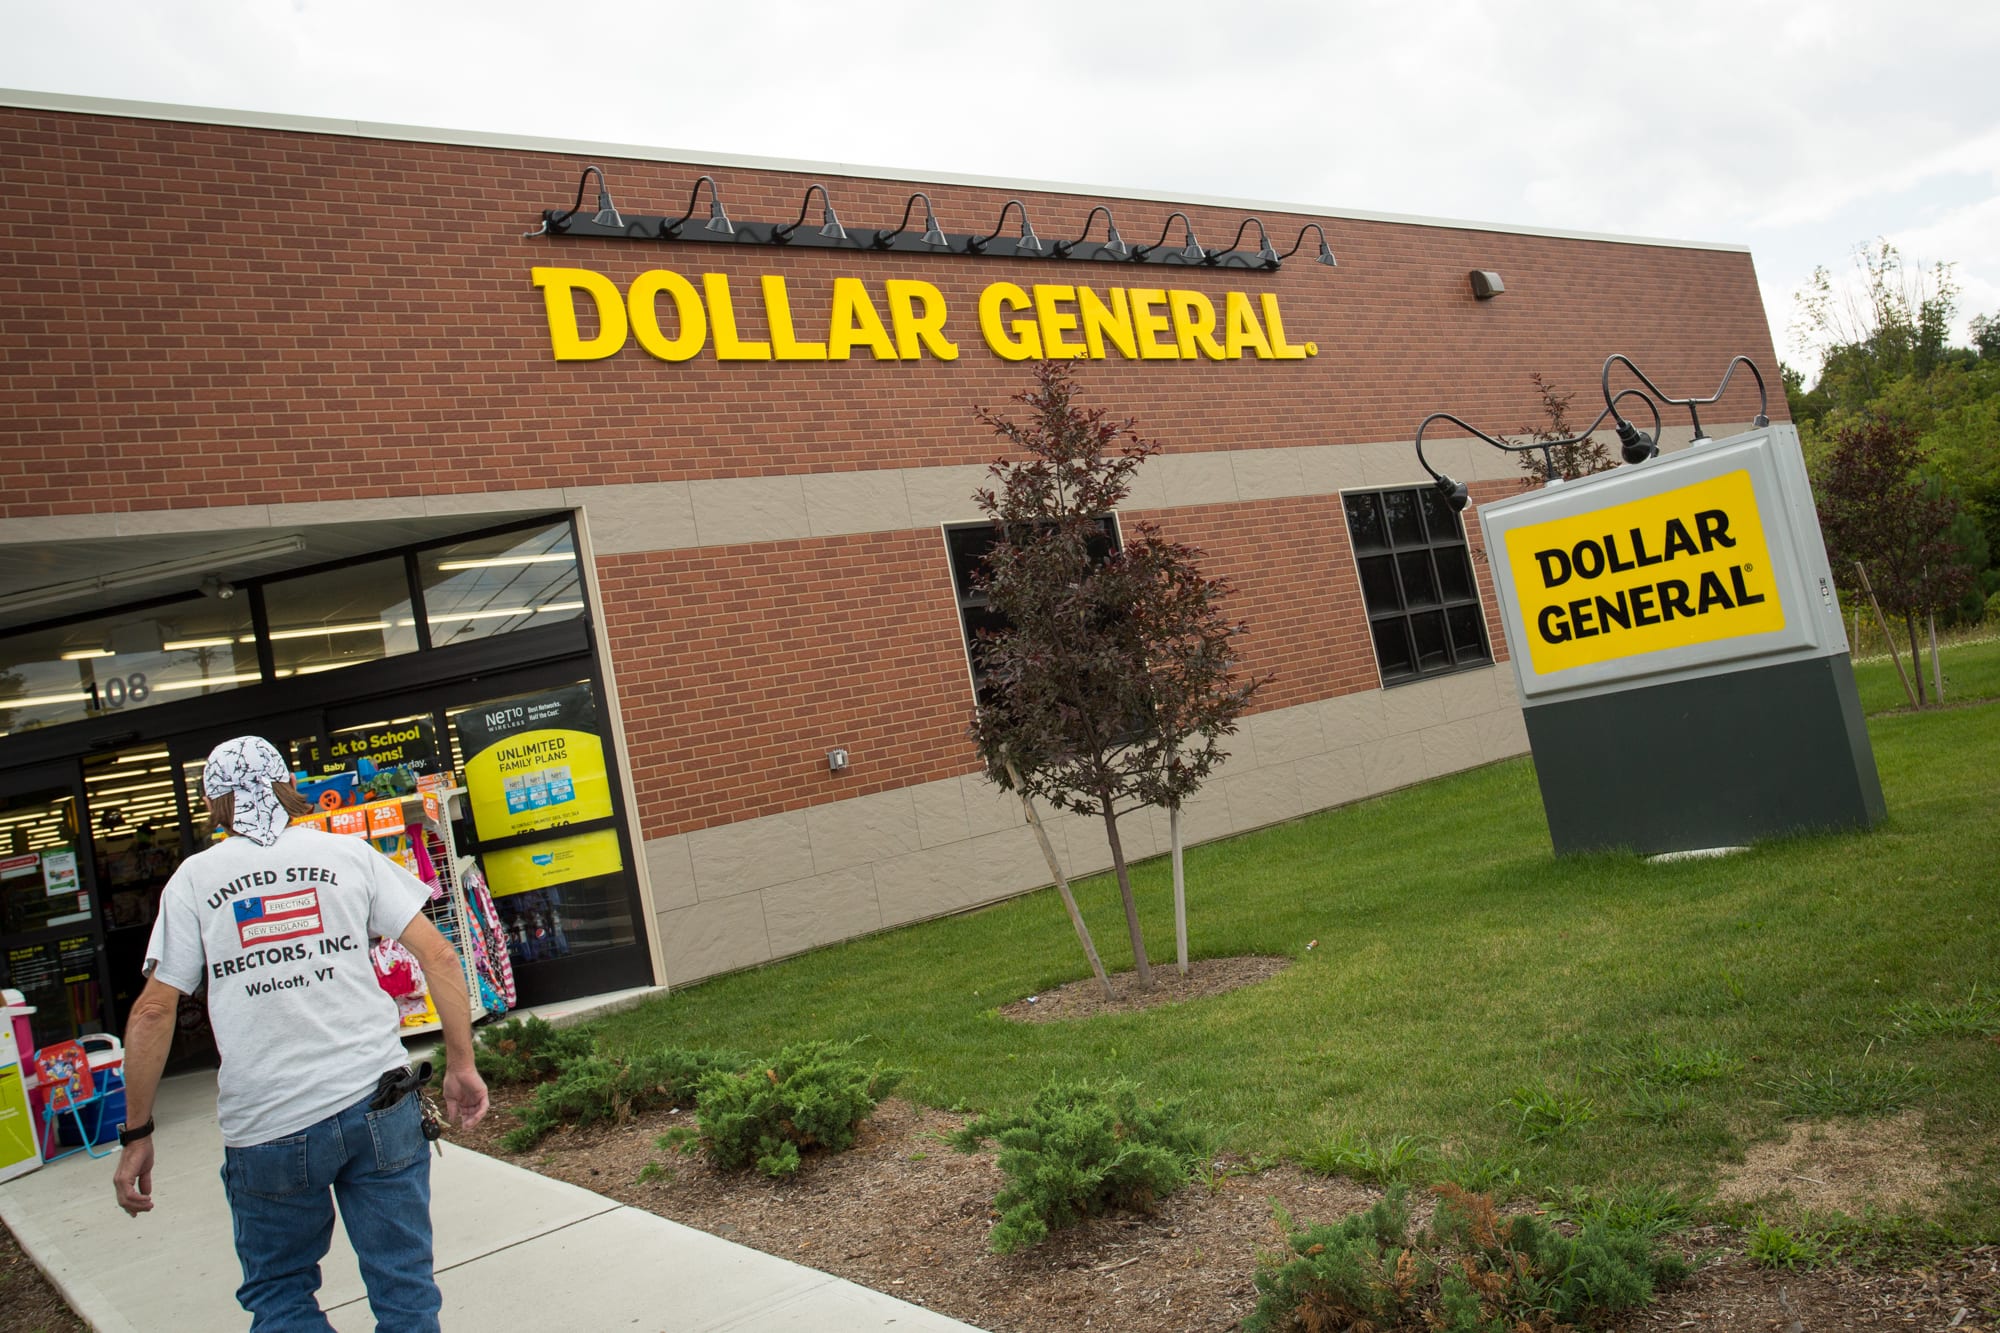 Dollar General soars, Dollar Tree slips as retailers raise forecasts